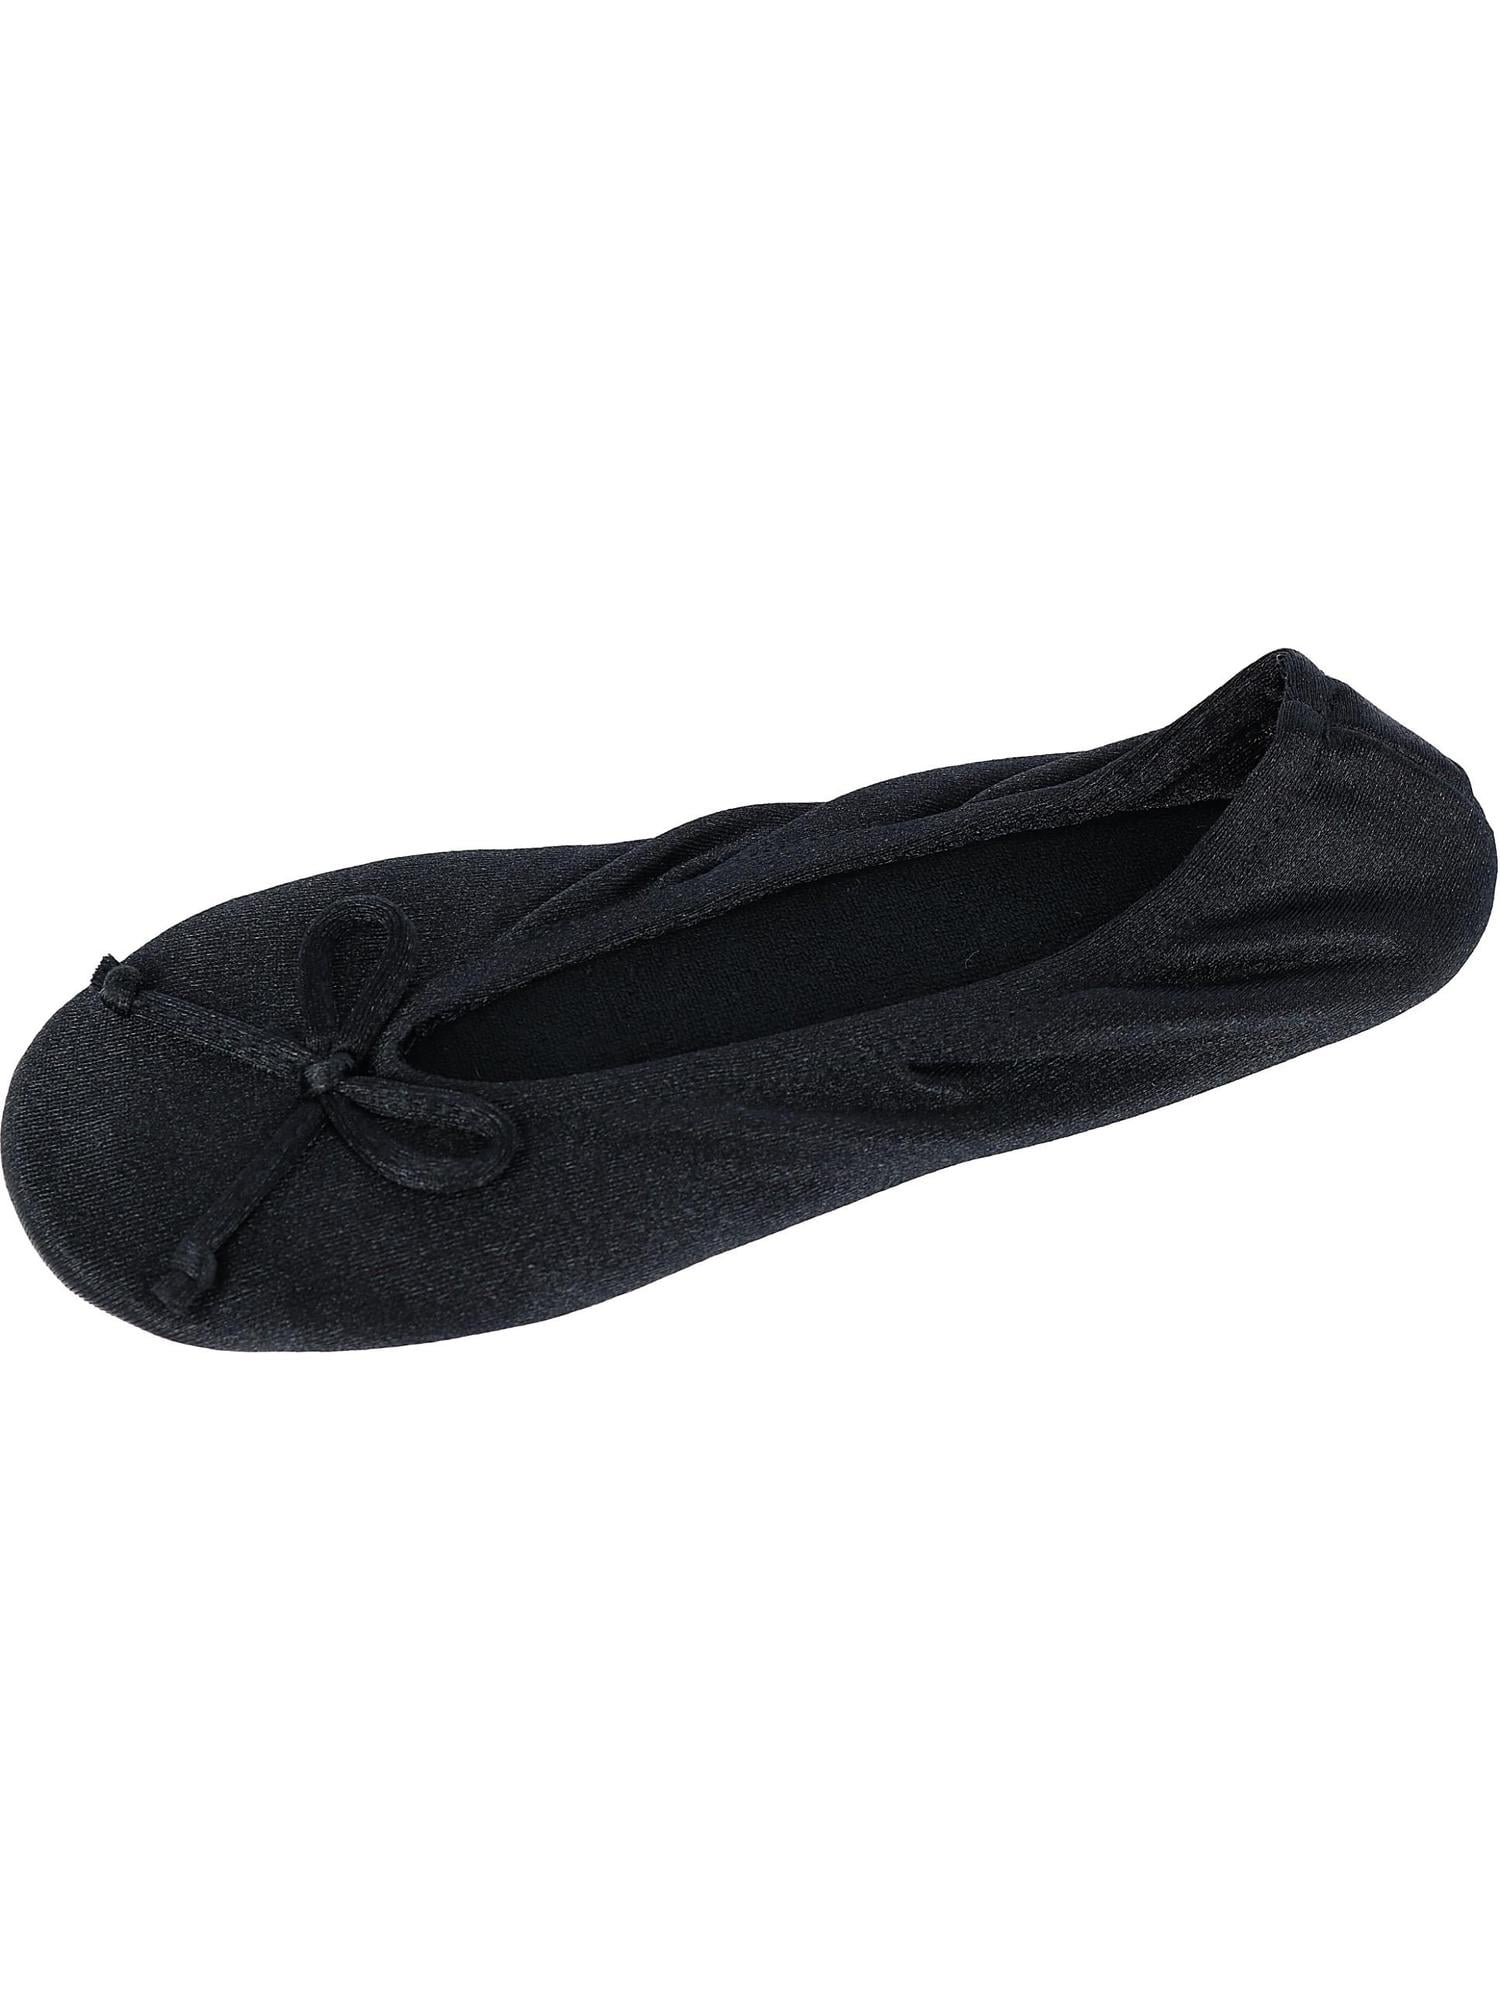 Isotoner Satin Classic Ballerina Slippers (Women) - Walmart.com